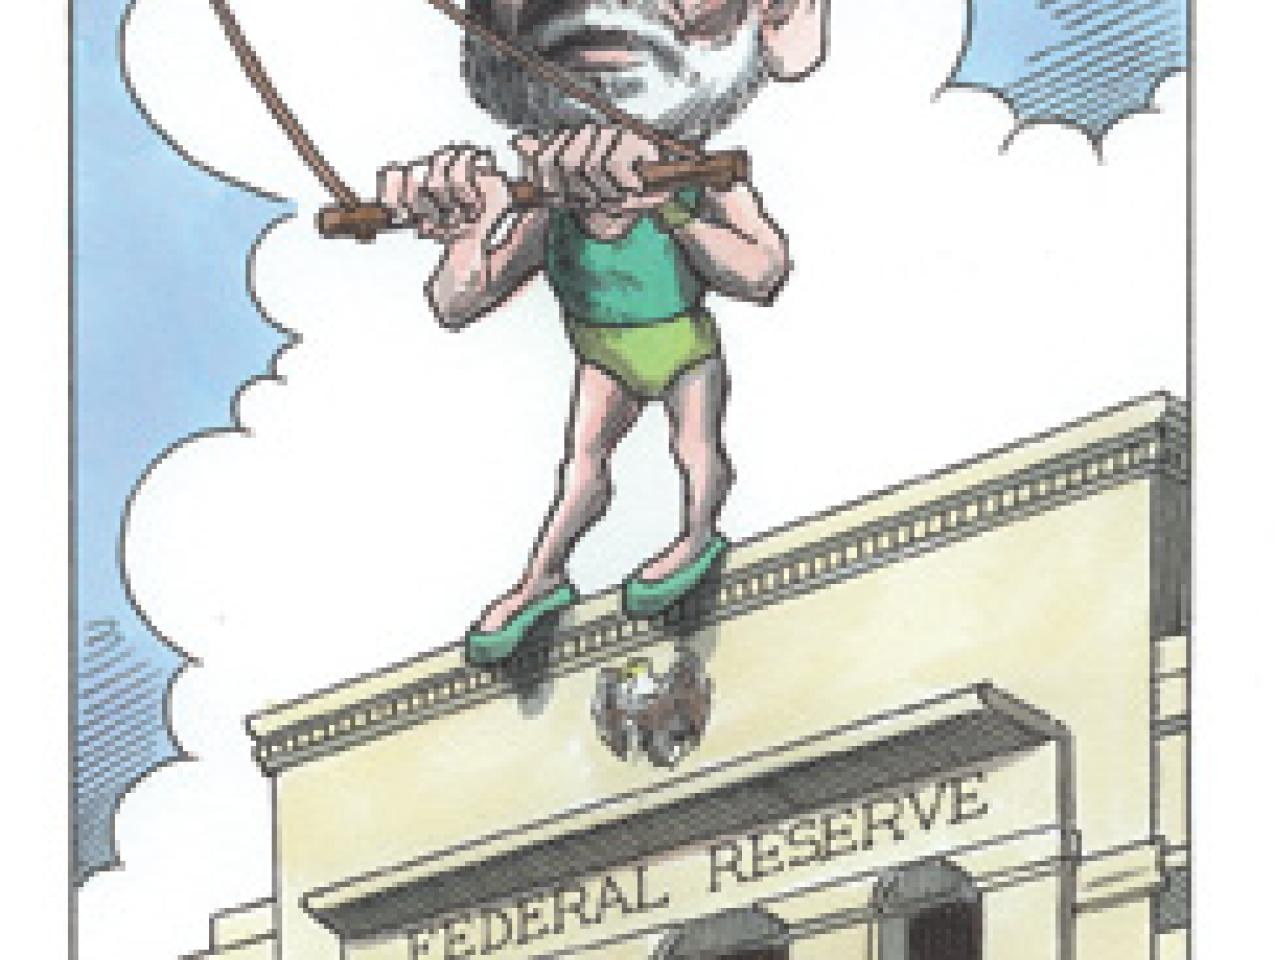 Ben Bernanke, Federal Reserve Chairman